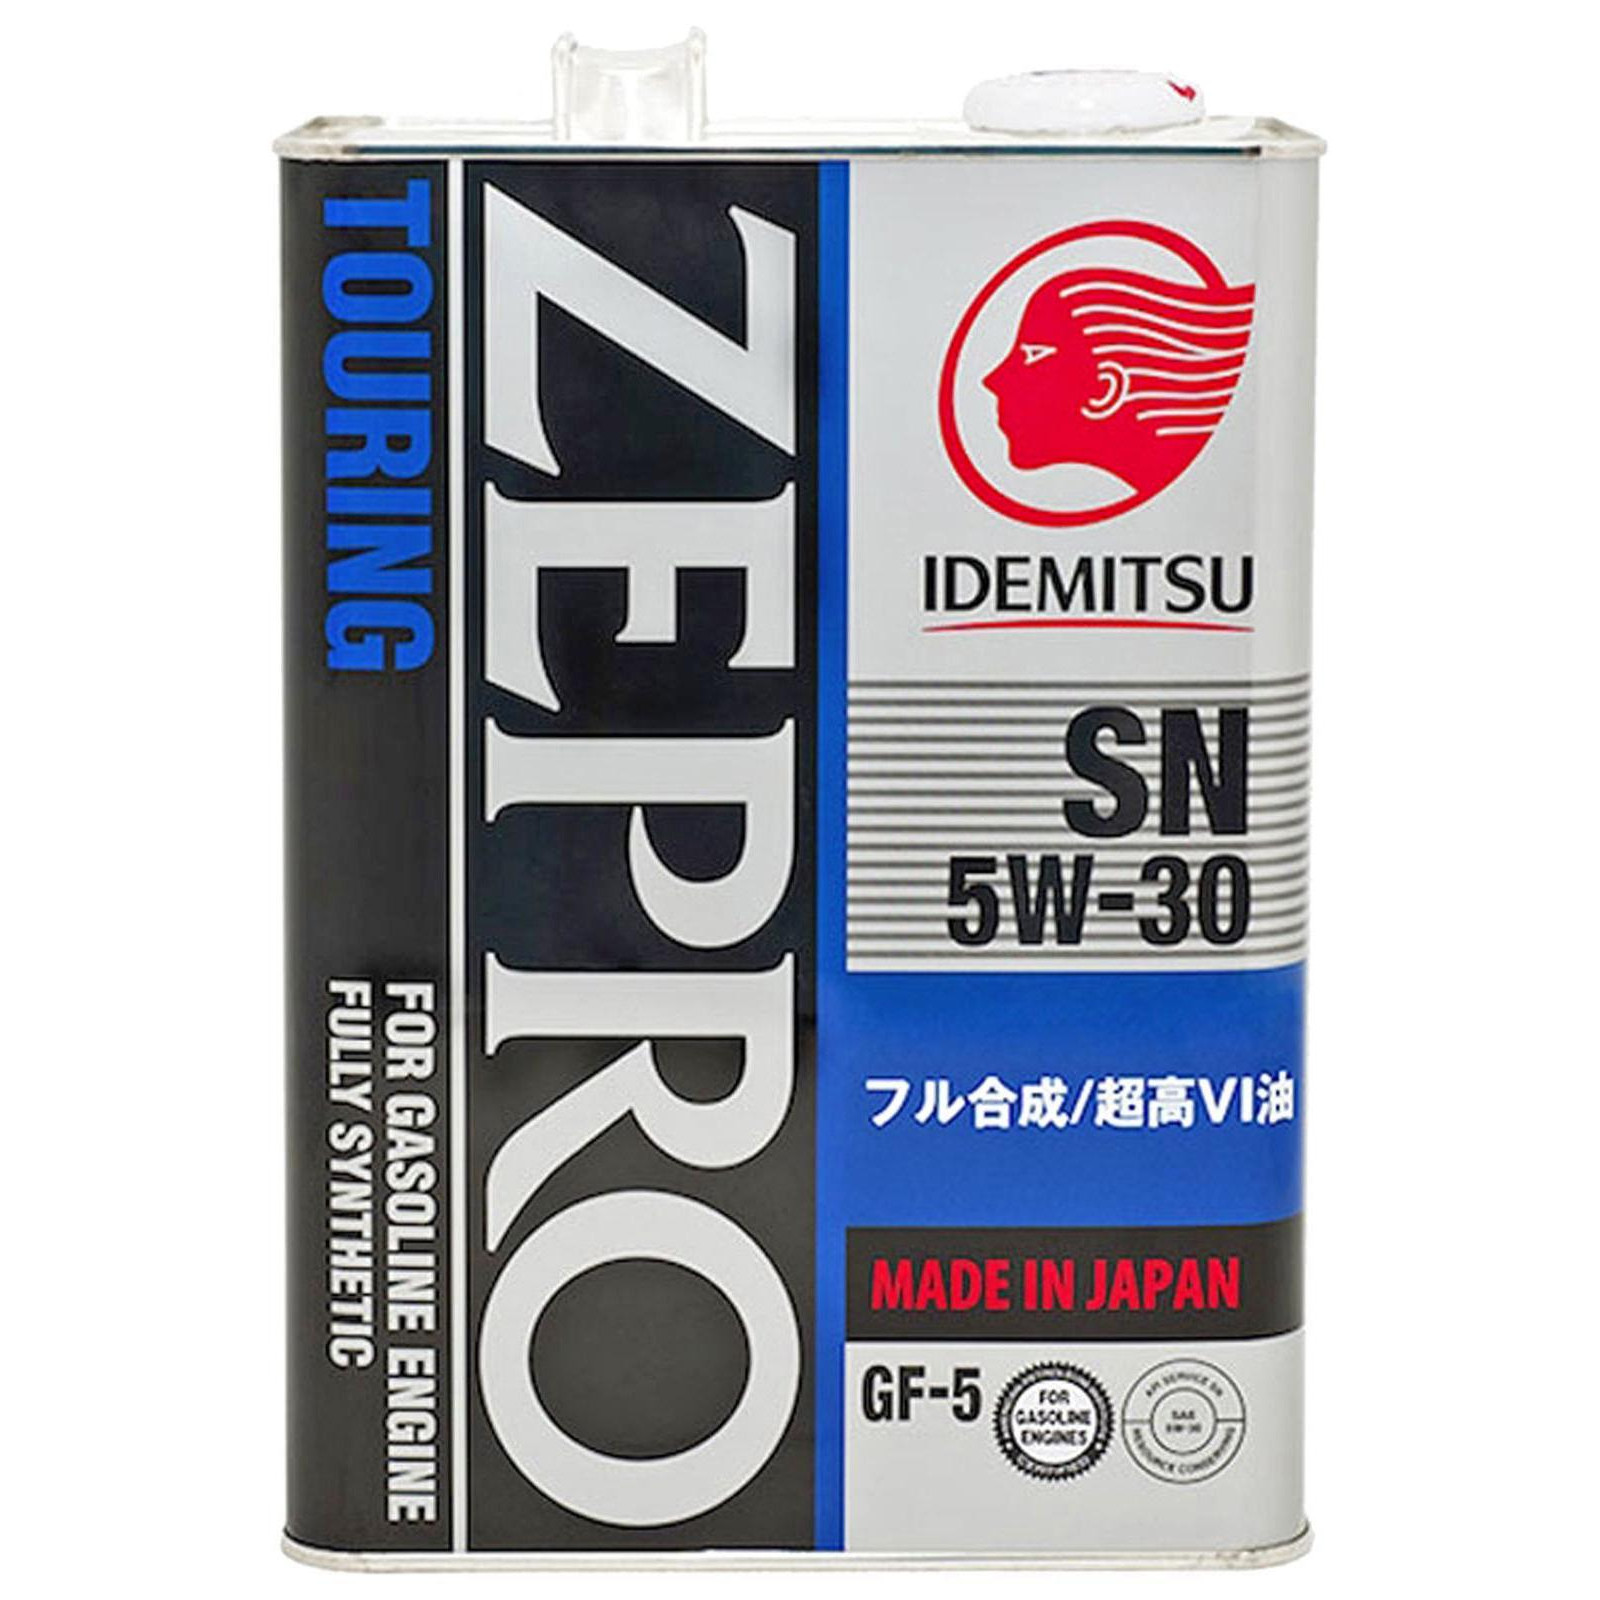 Idemitsu Zepro Touring 5W-30 4л - зображення 1